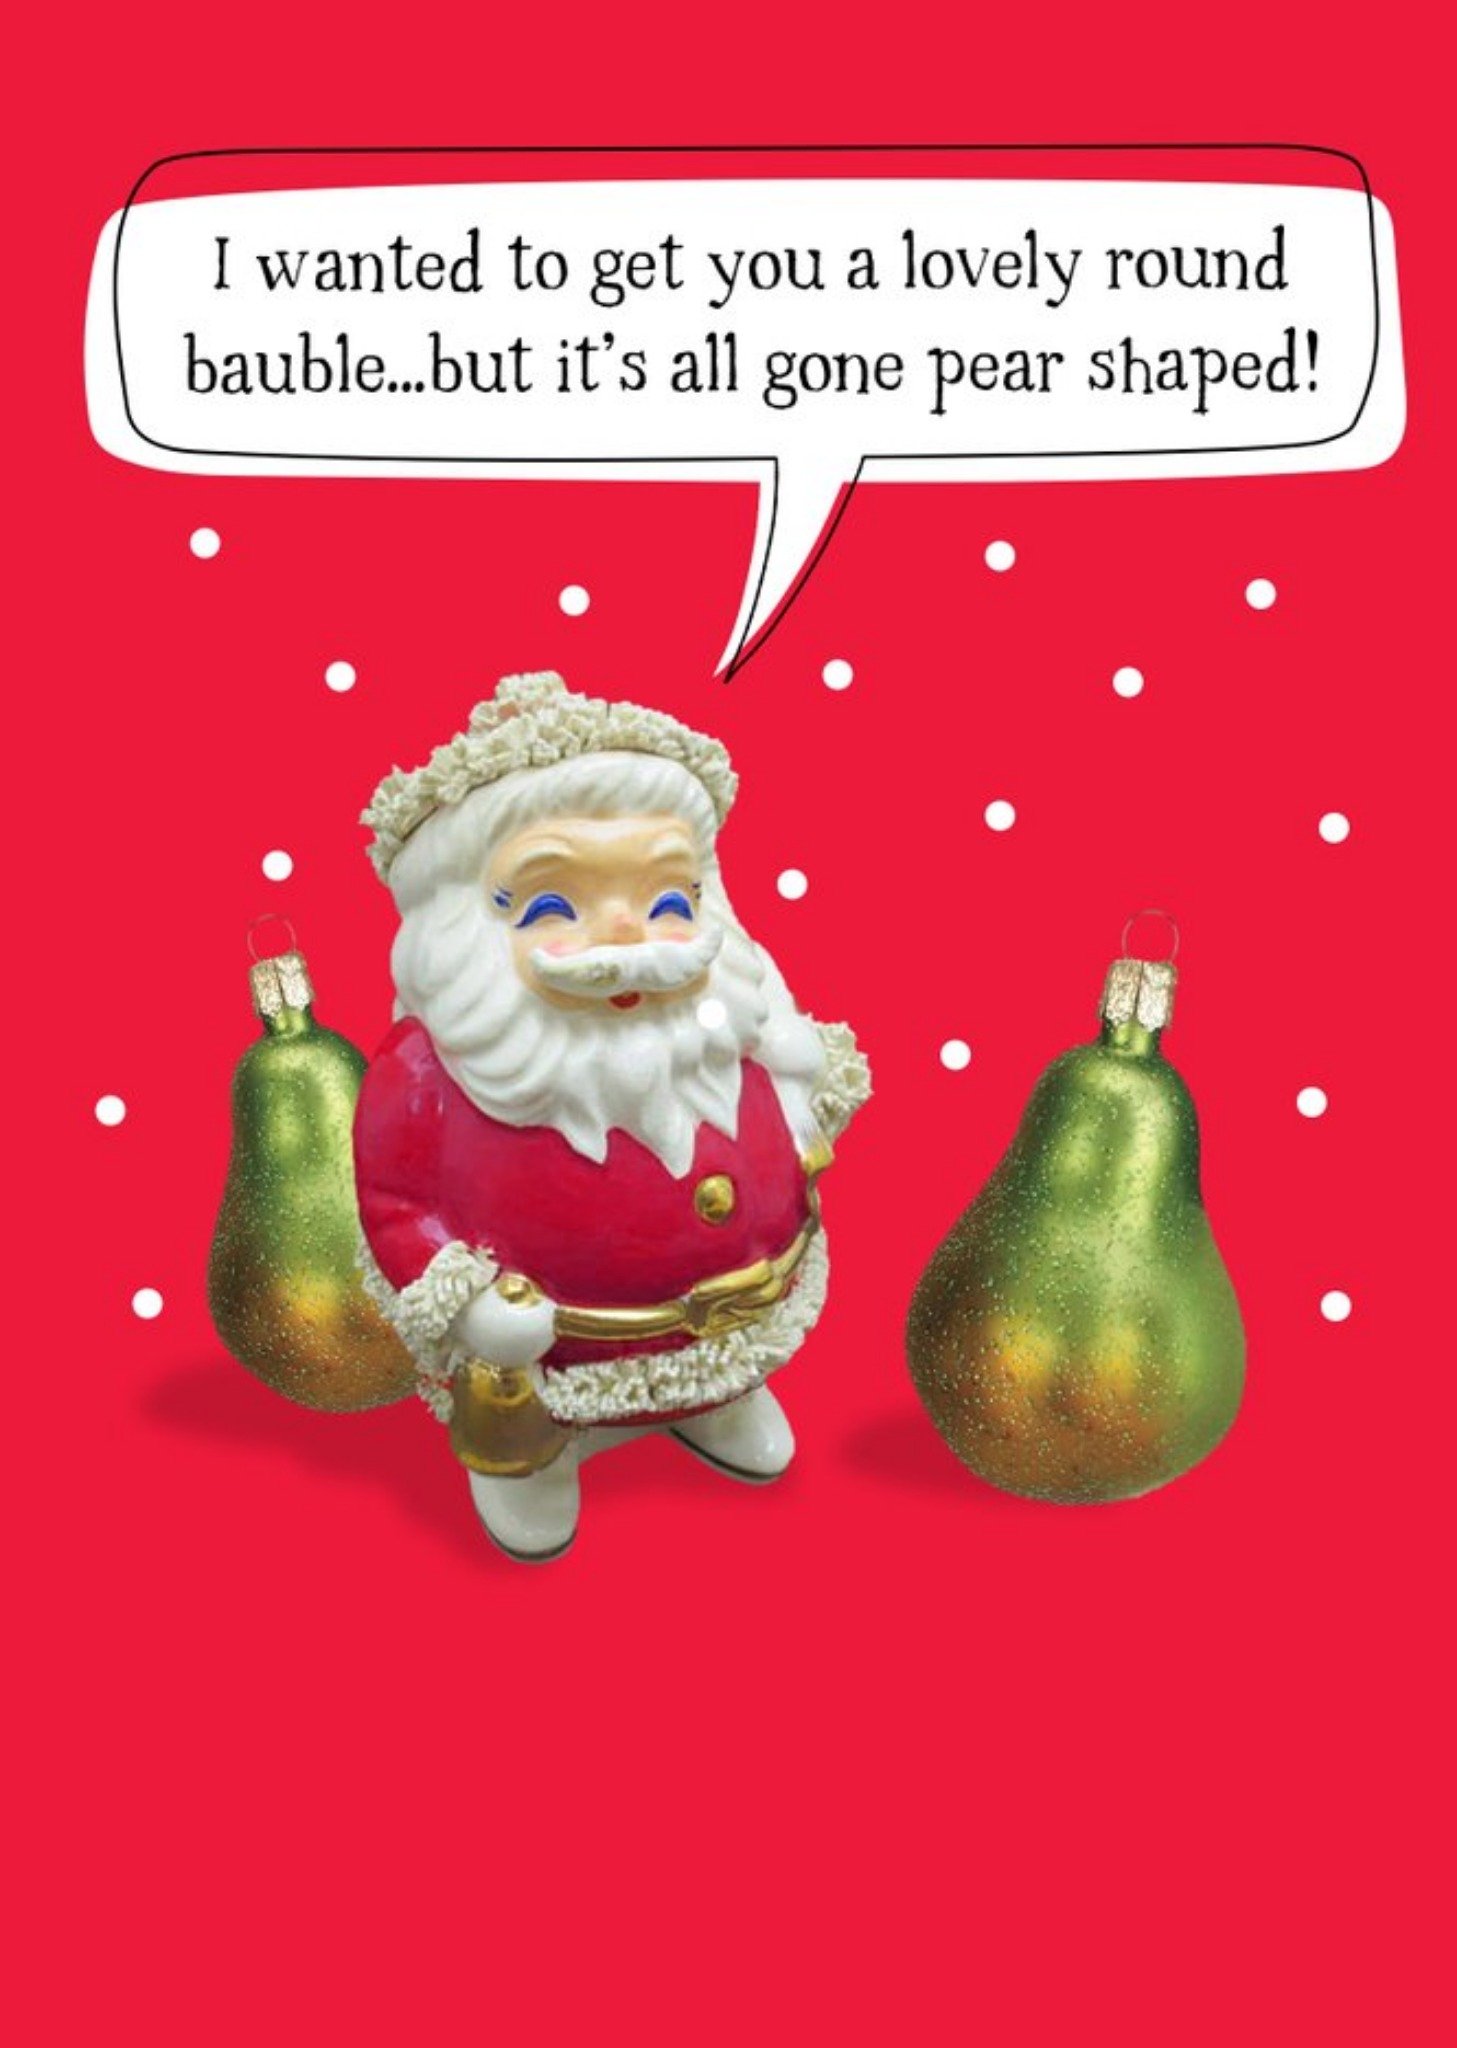 Moonpig Pear Shaped Baulble Funny Christmas Card Ecard